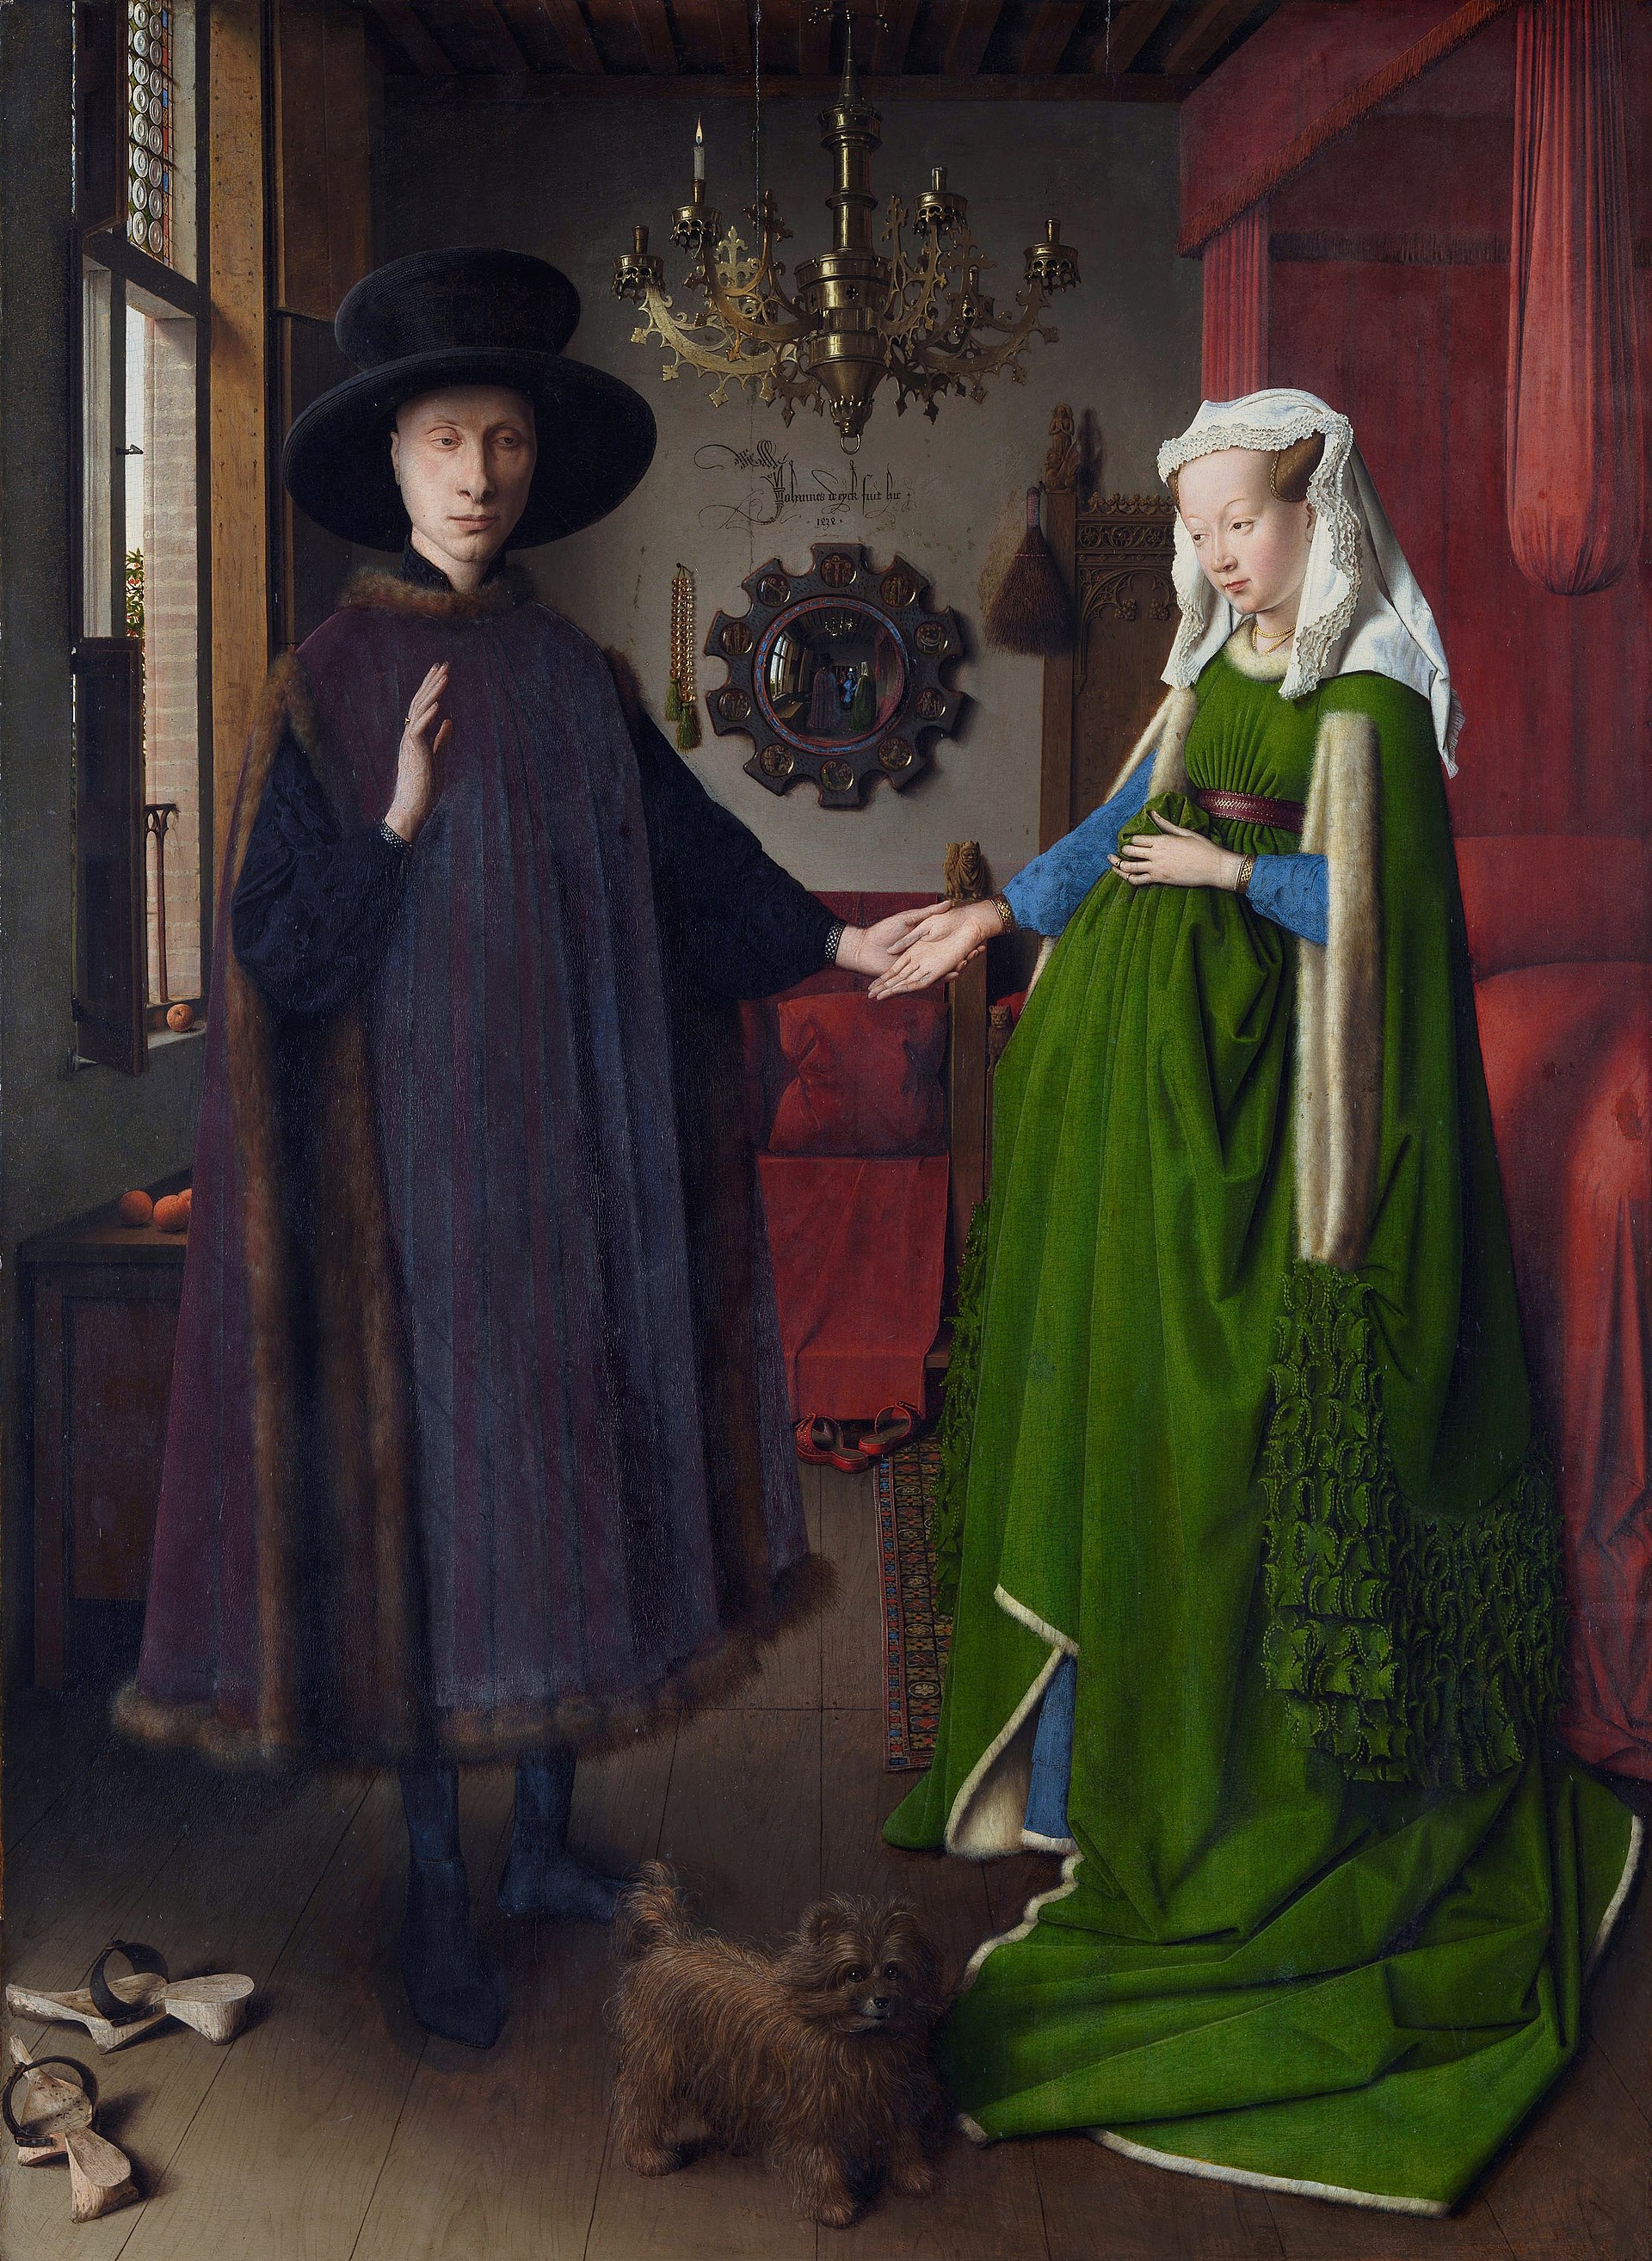 Jan van Eyck's The Arnolfini portrait